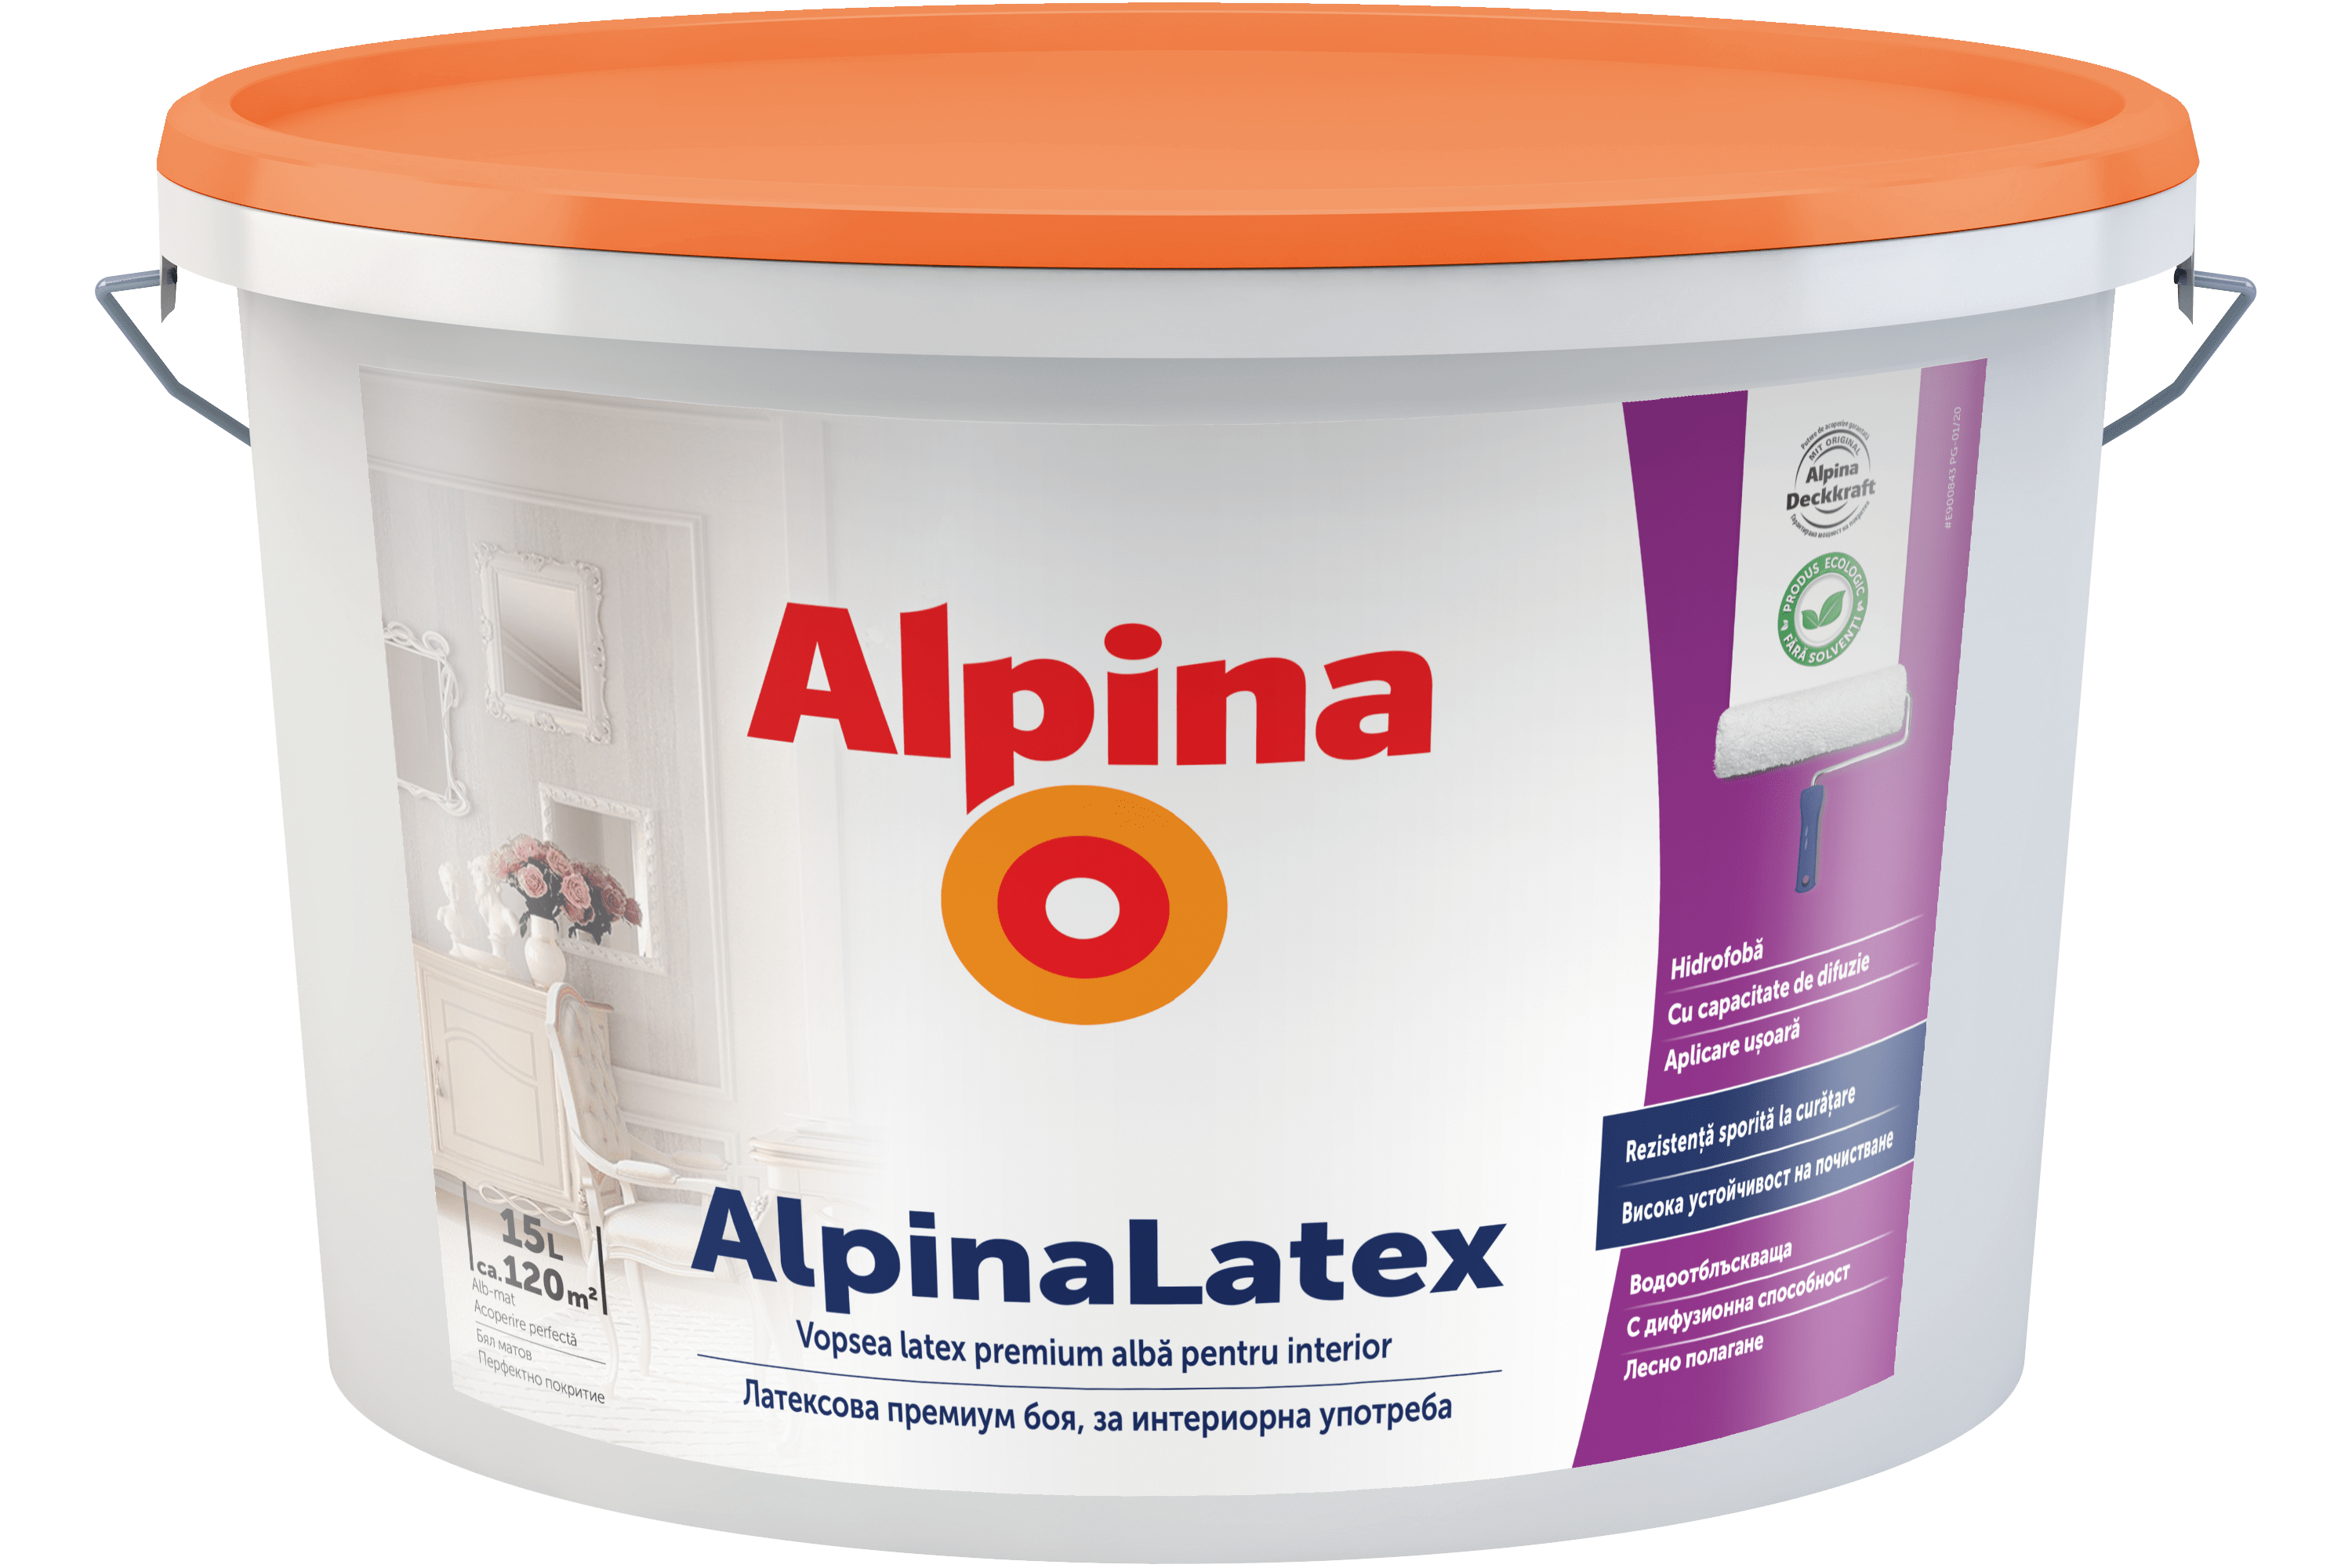 Alpina Latex